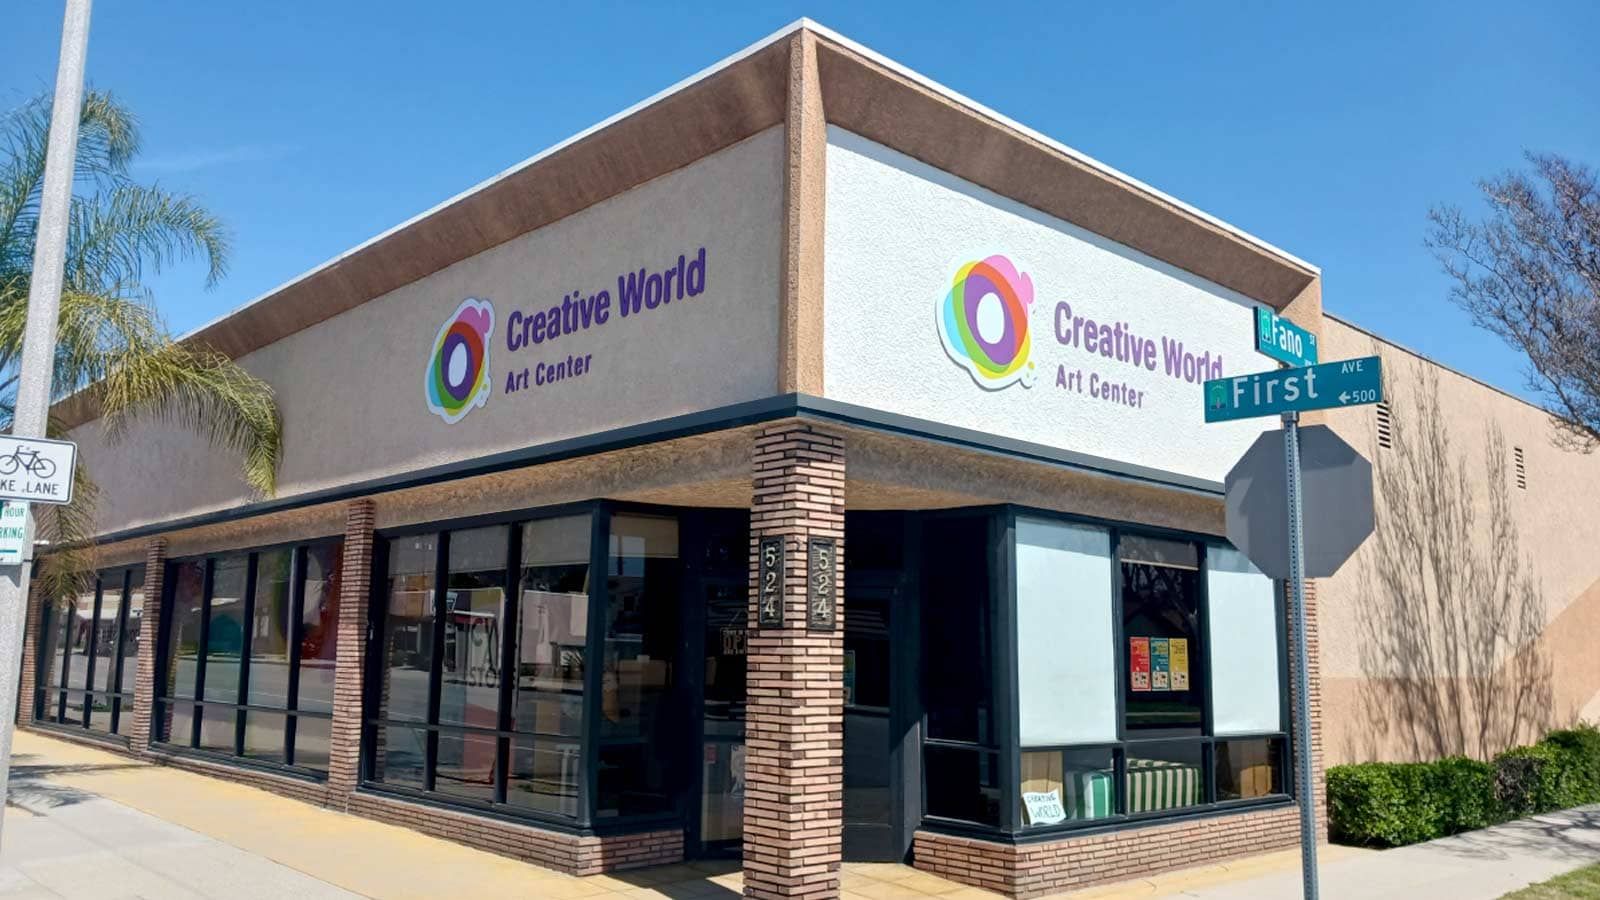 Creative World Art Center aluminum signs on the building